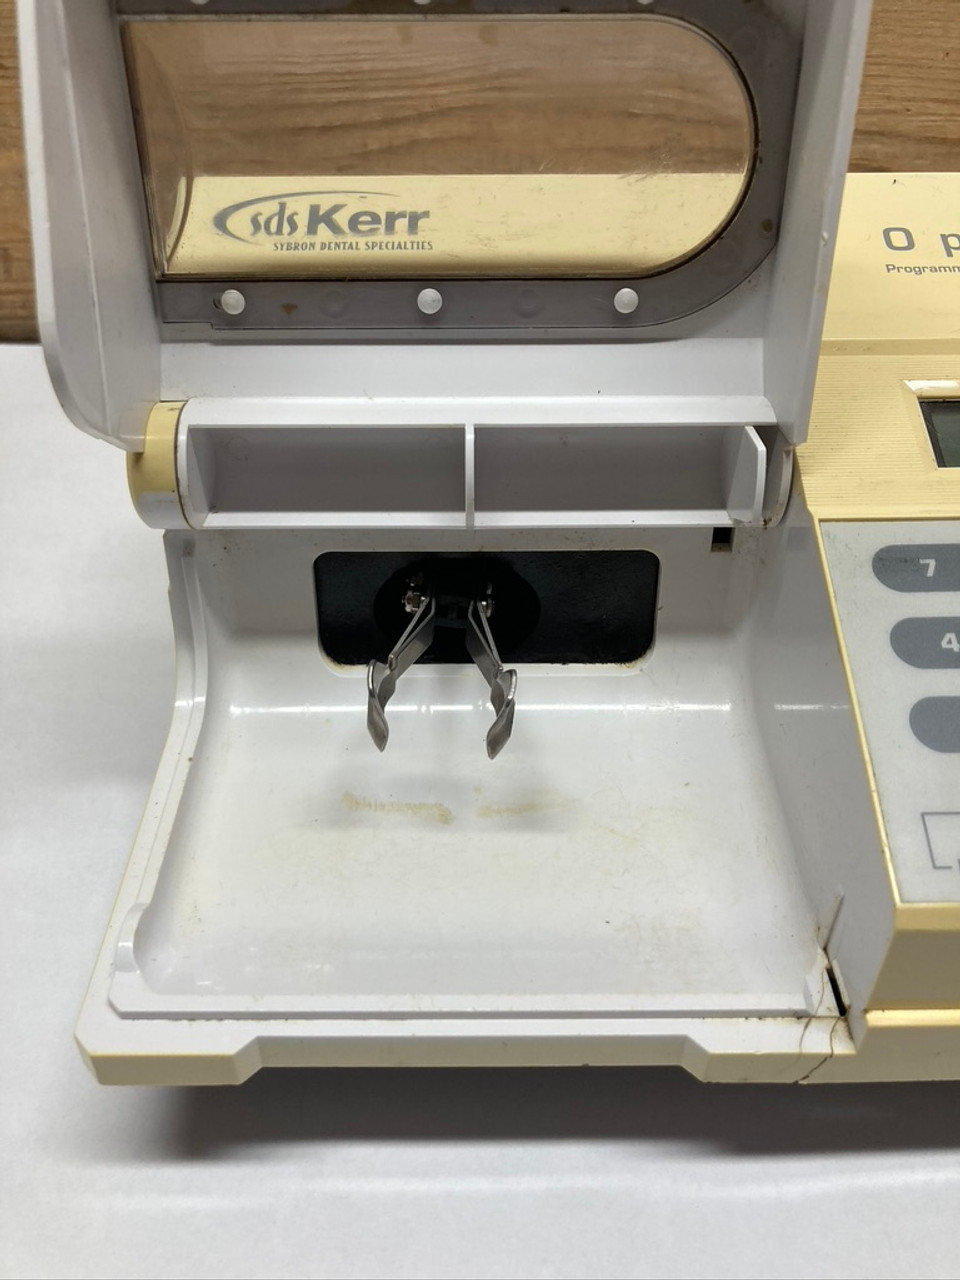 SDS Kerr OptiMix 100 Dental Amalgamator Mixing System SN:15026554